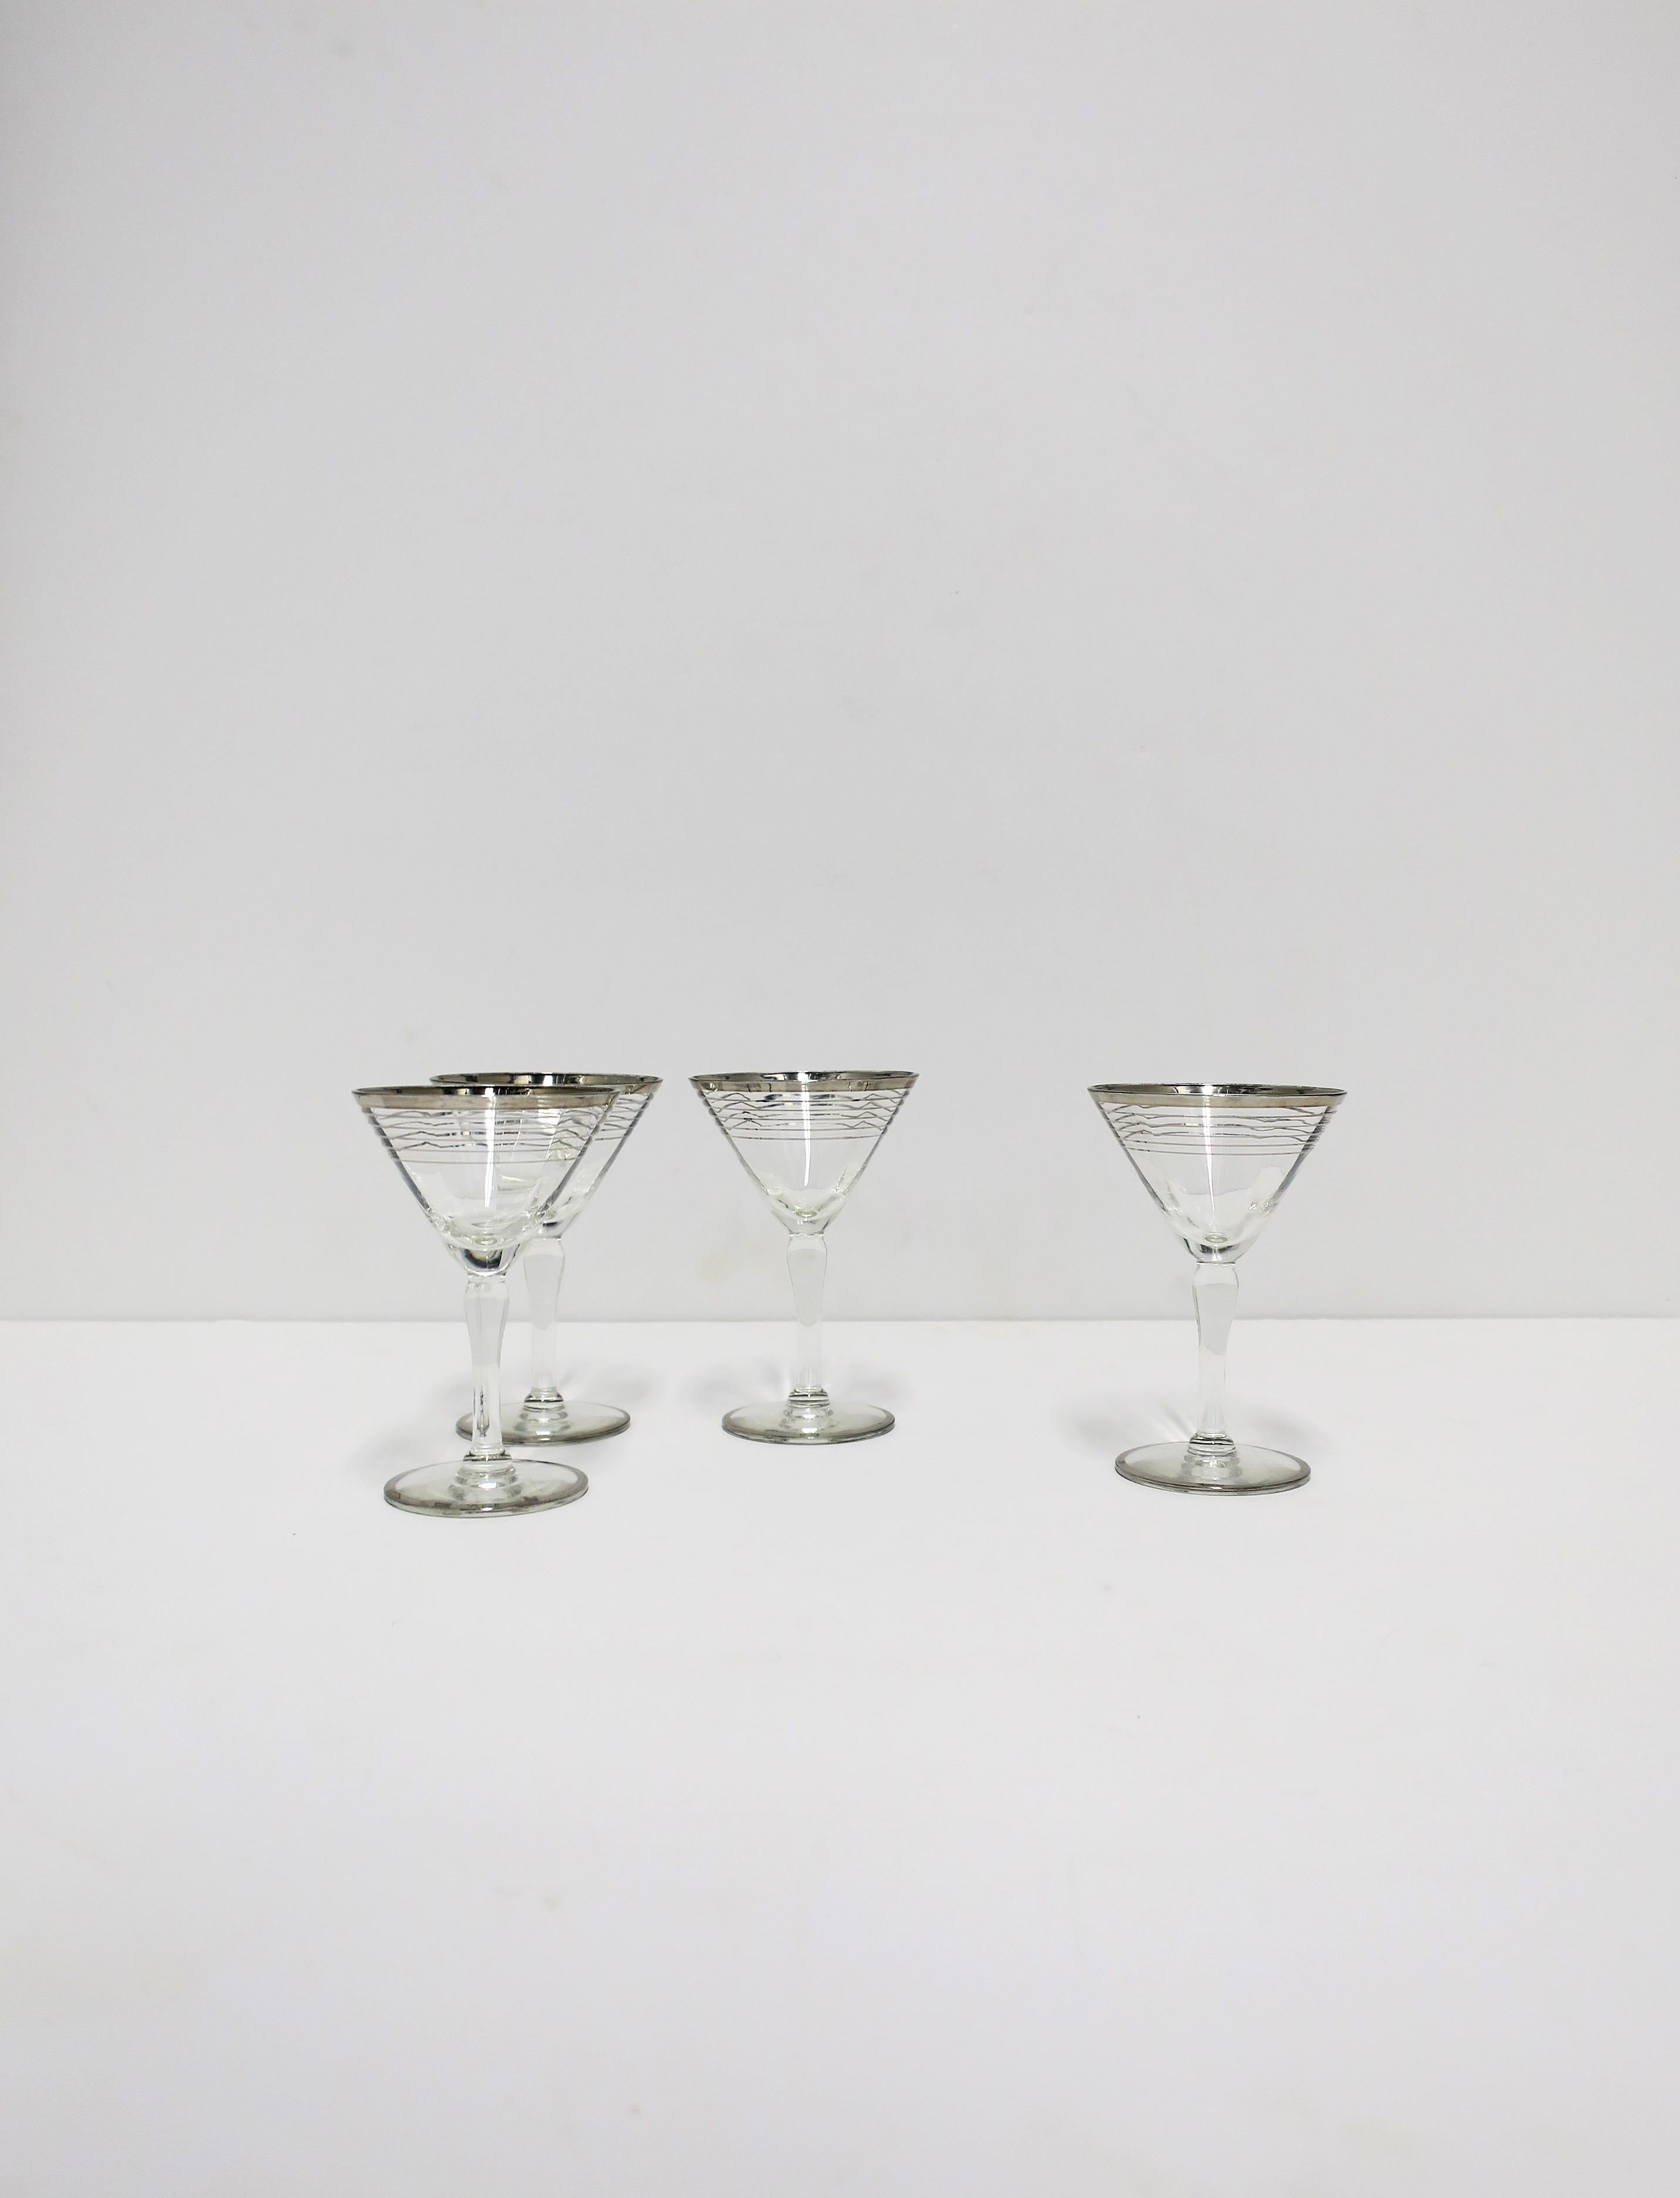 European Mid-Century Modern Cocktail or Martini Glasses, Set of 4